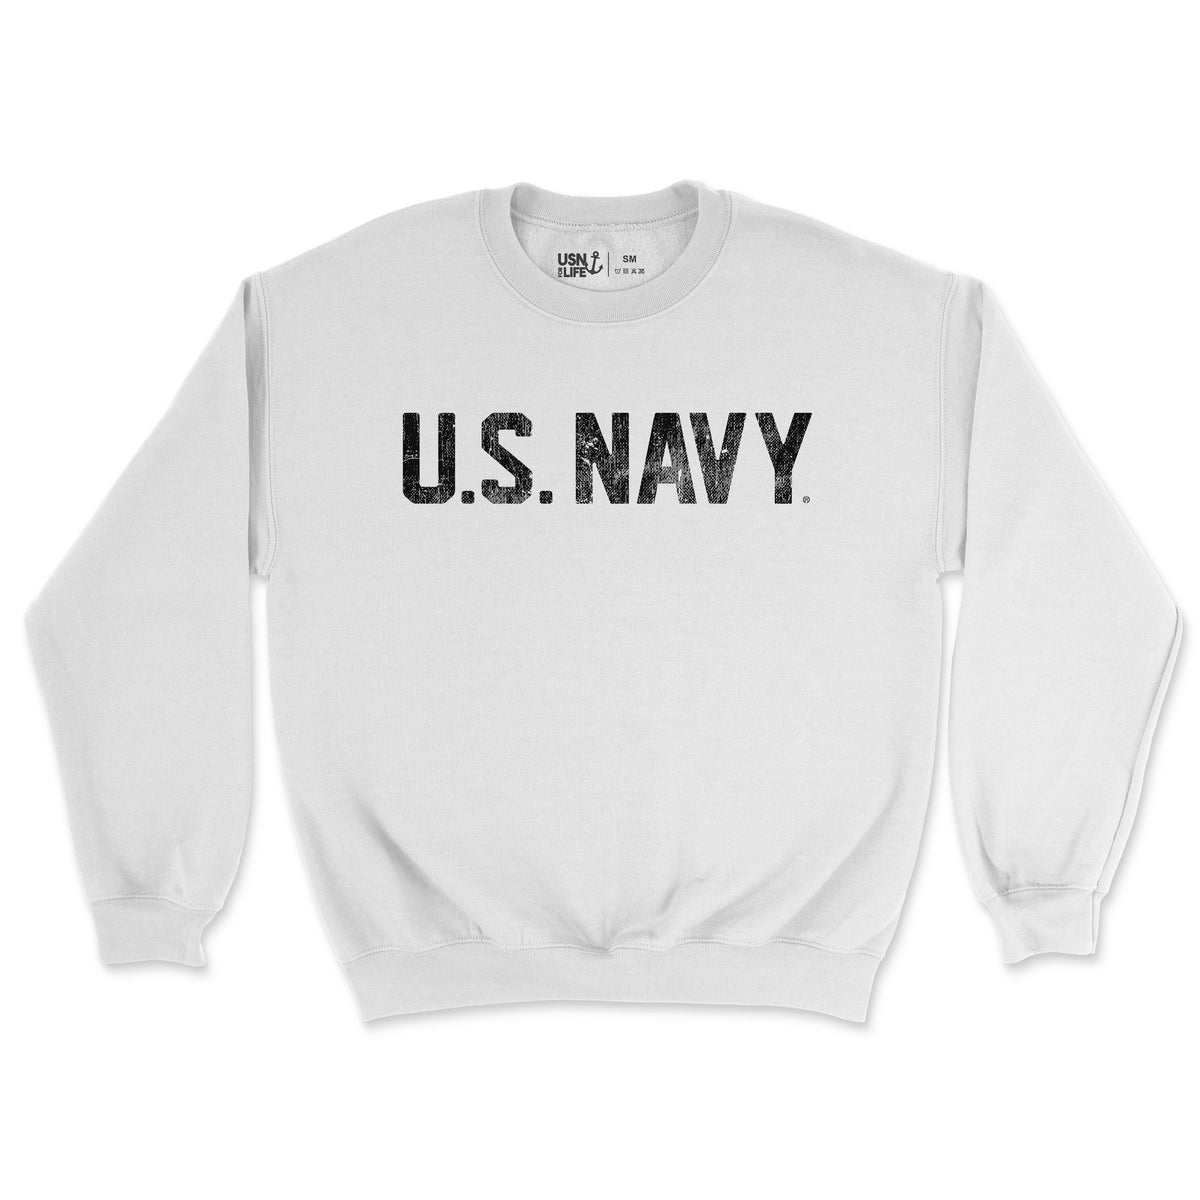 Ink Up America Well Fed Fly Fishing Widow Wife Sweatshirt for Men Small Dark Gray, adult unisex